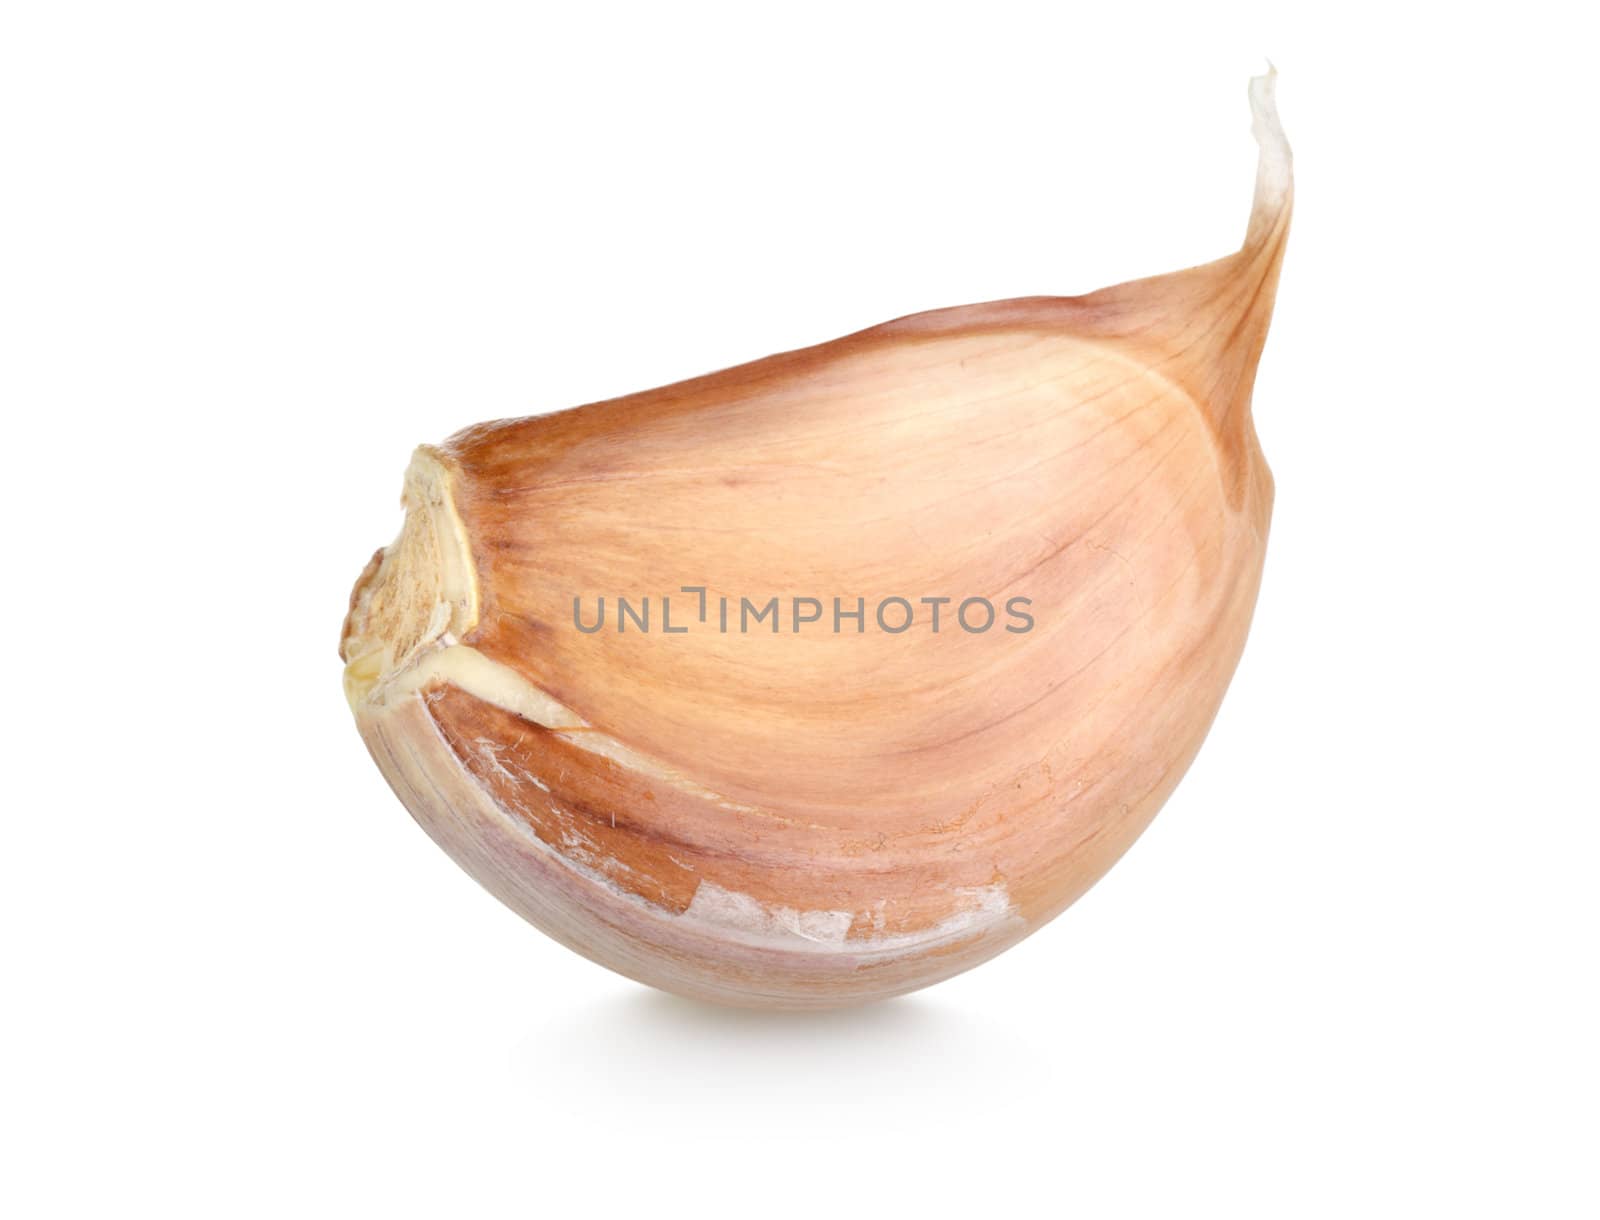 Cloves of garlic isolated on white background